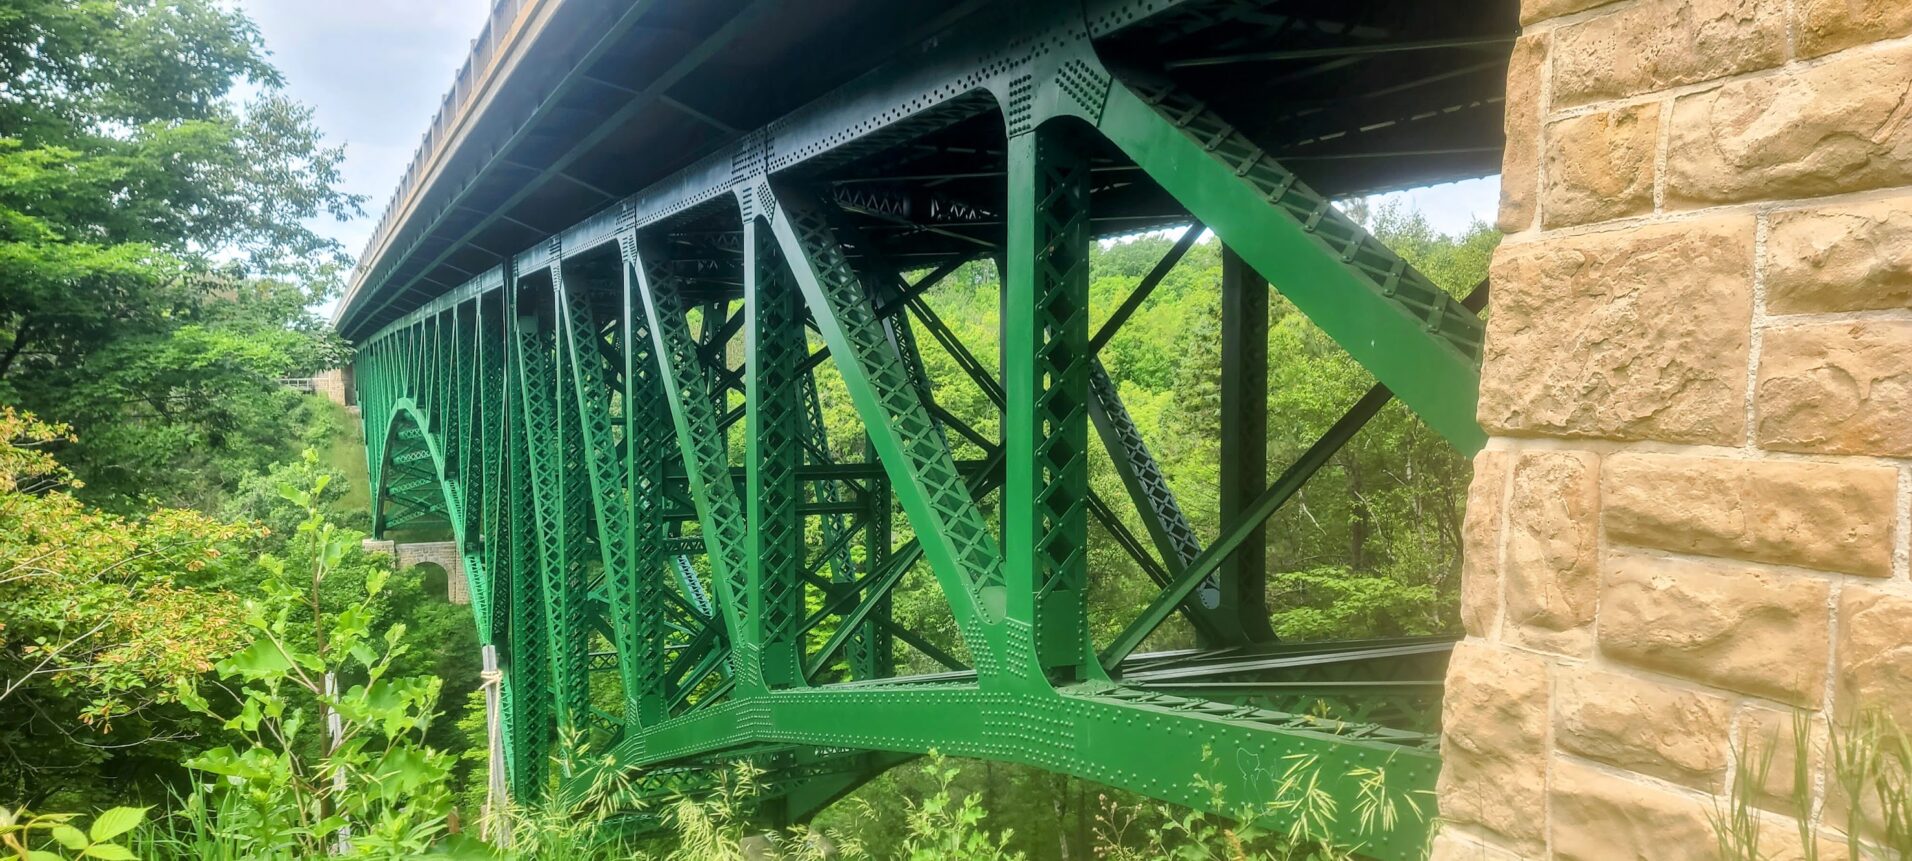 Cut River Bridge